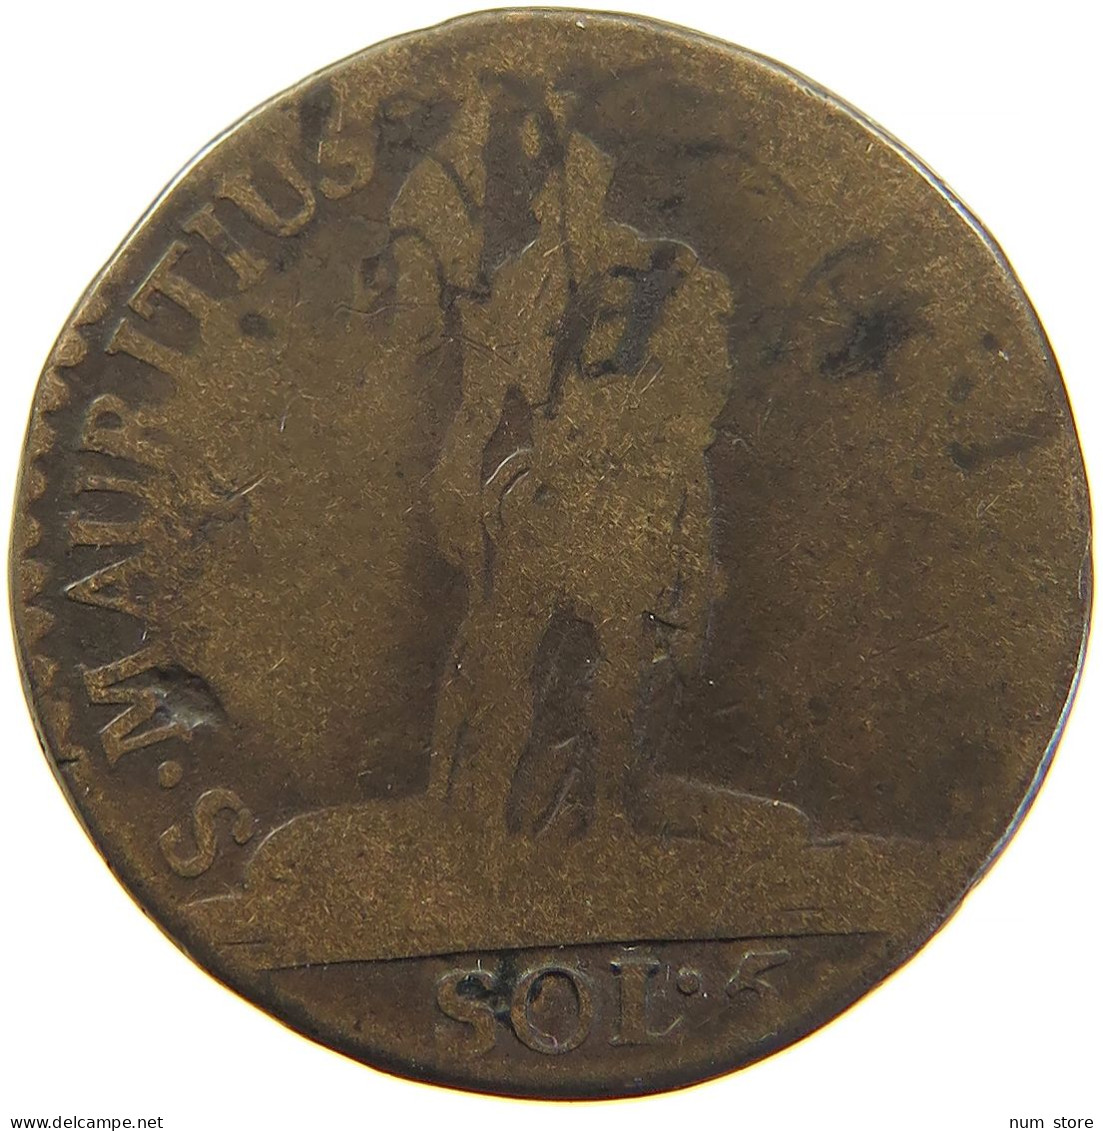 ITALY STATES SARDINIA 5 SOLDI 1795 Vittorio Amadeo III., 1773-1796. #s100 0385 - Piémont-Sardaigne-Savoie Italienne